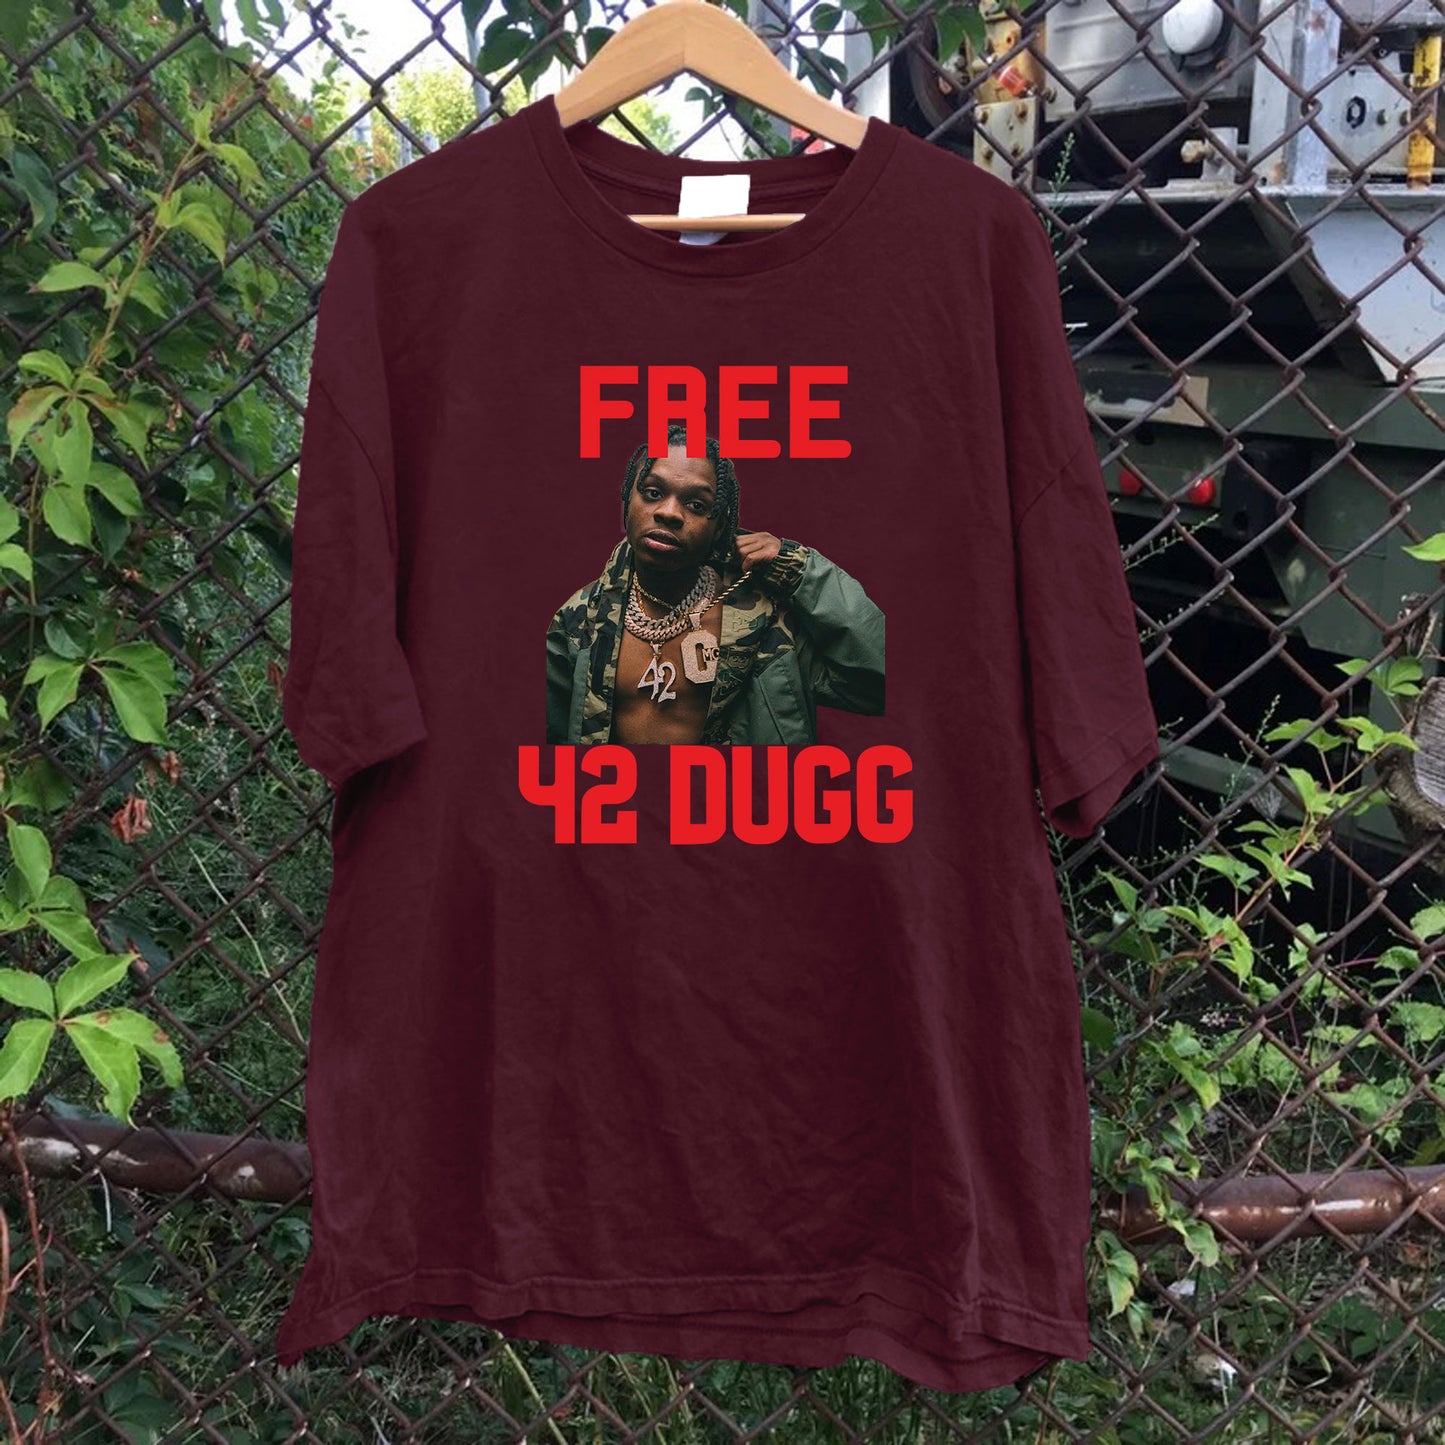 Free 42 Dugg Tee